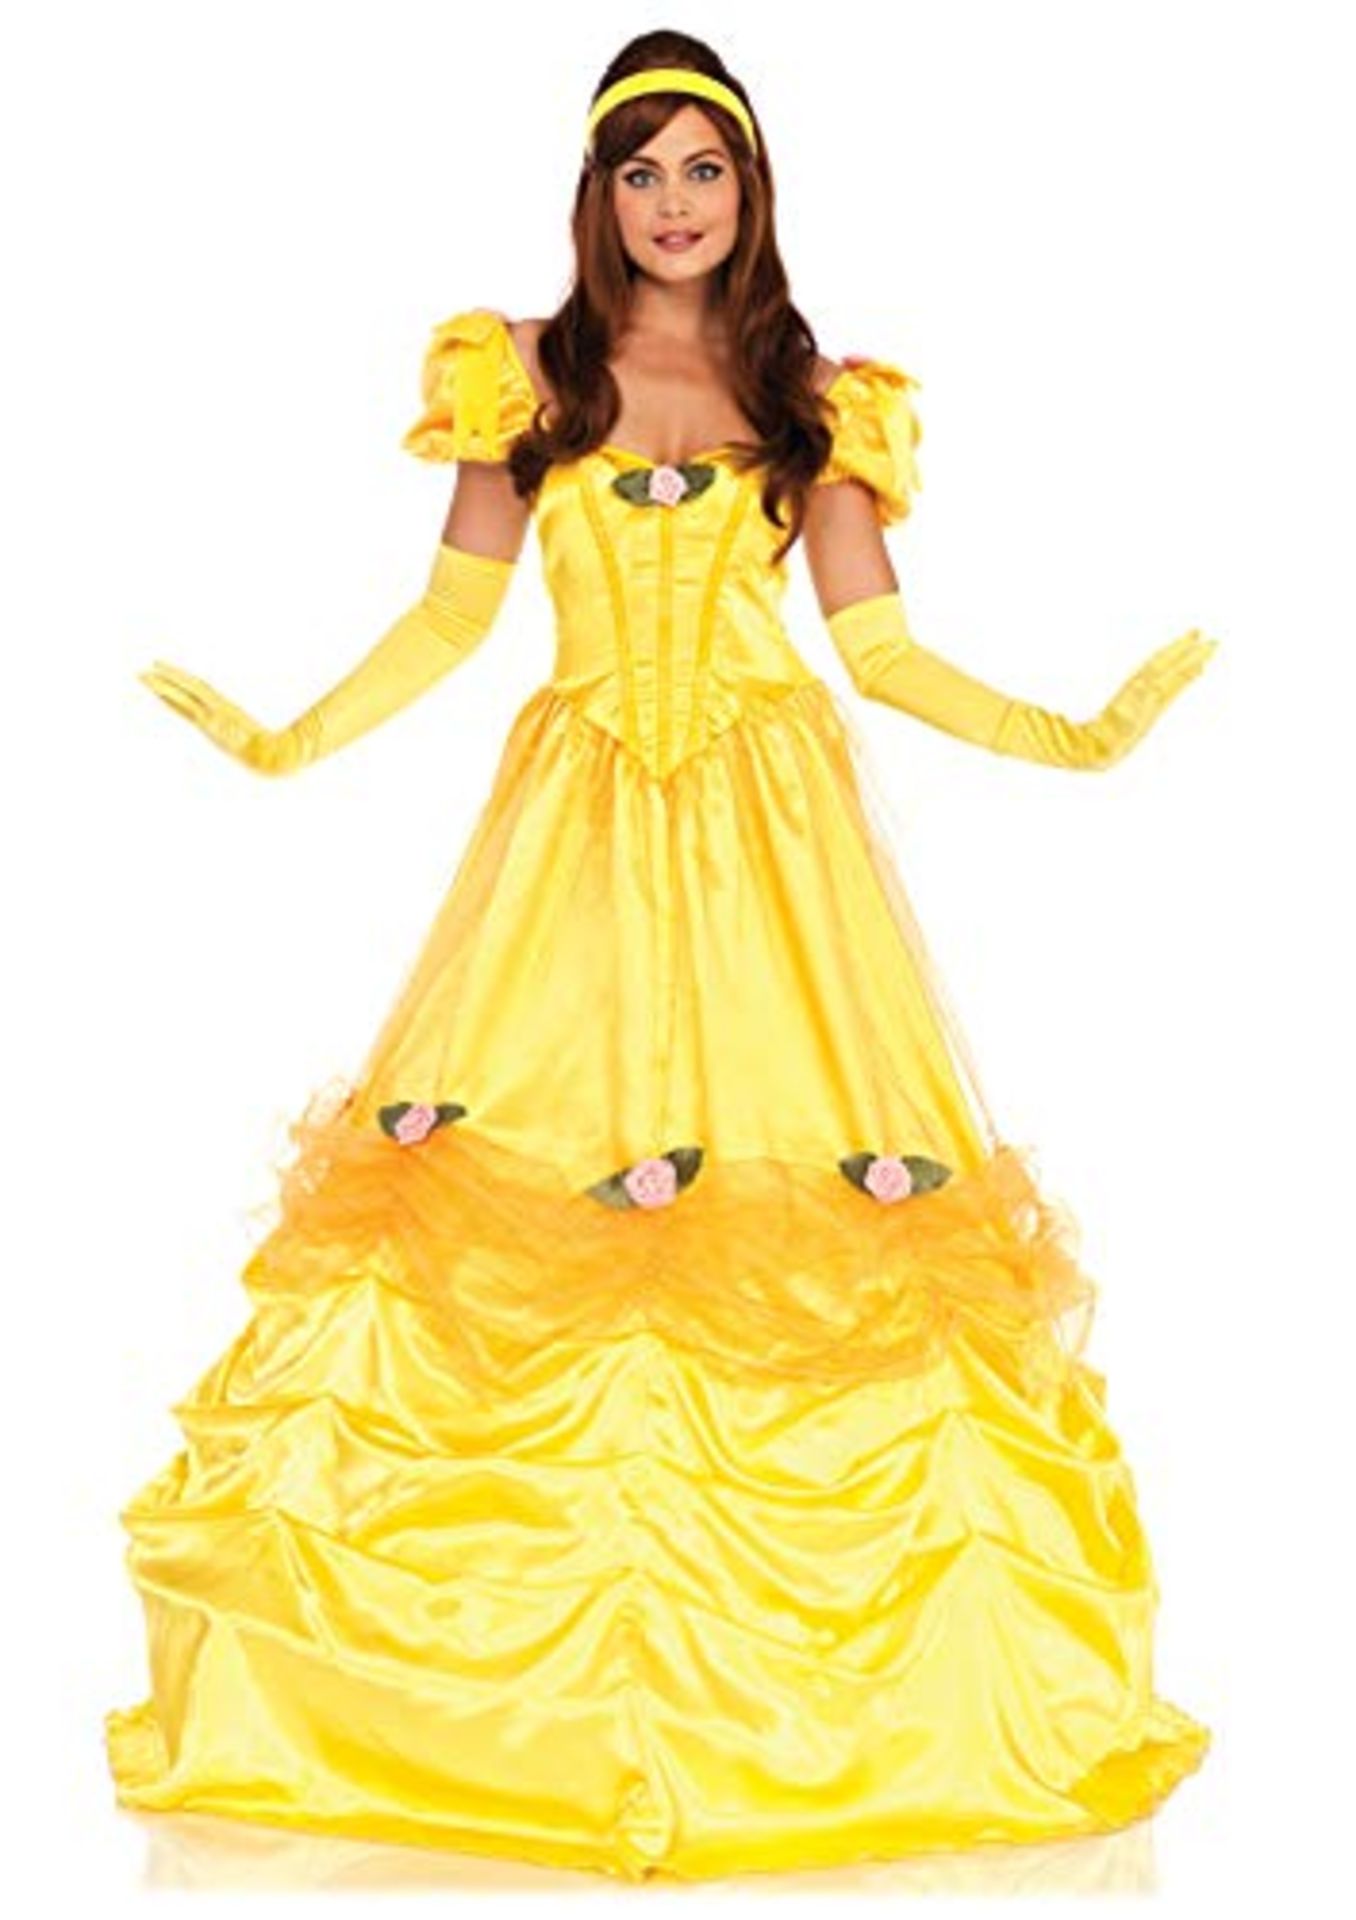 RRP £72.00 LEG AVENUE Women's Deluxe Belle Of The Ball Costume, Yellow, S EU